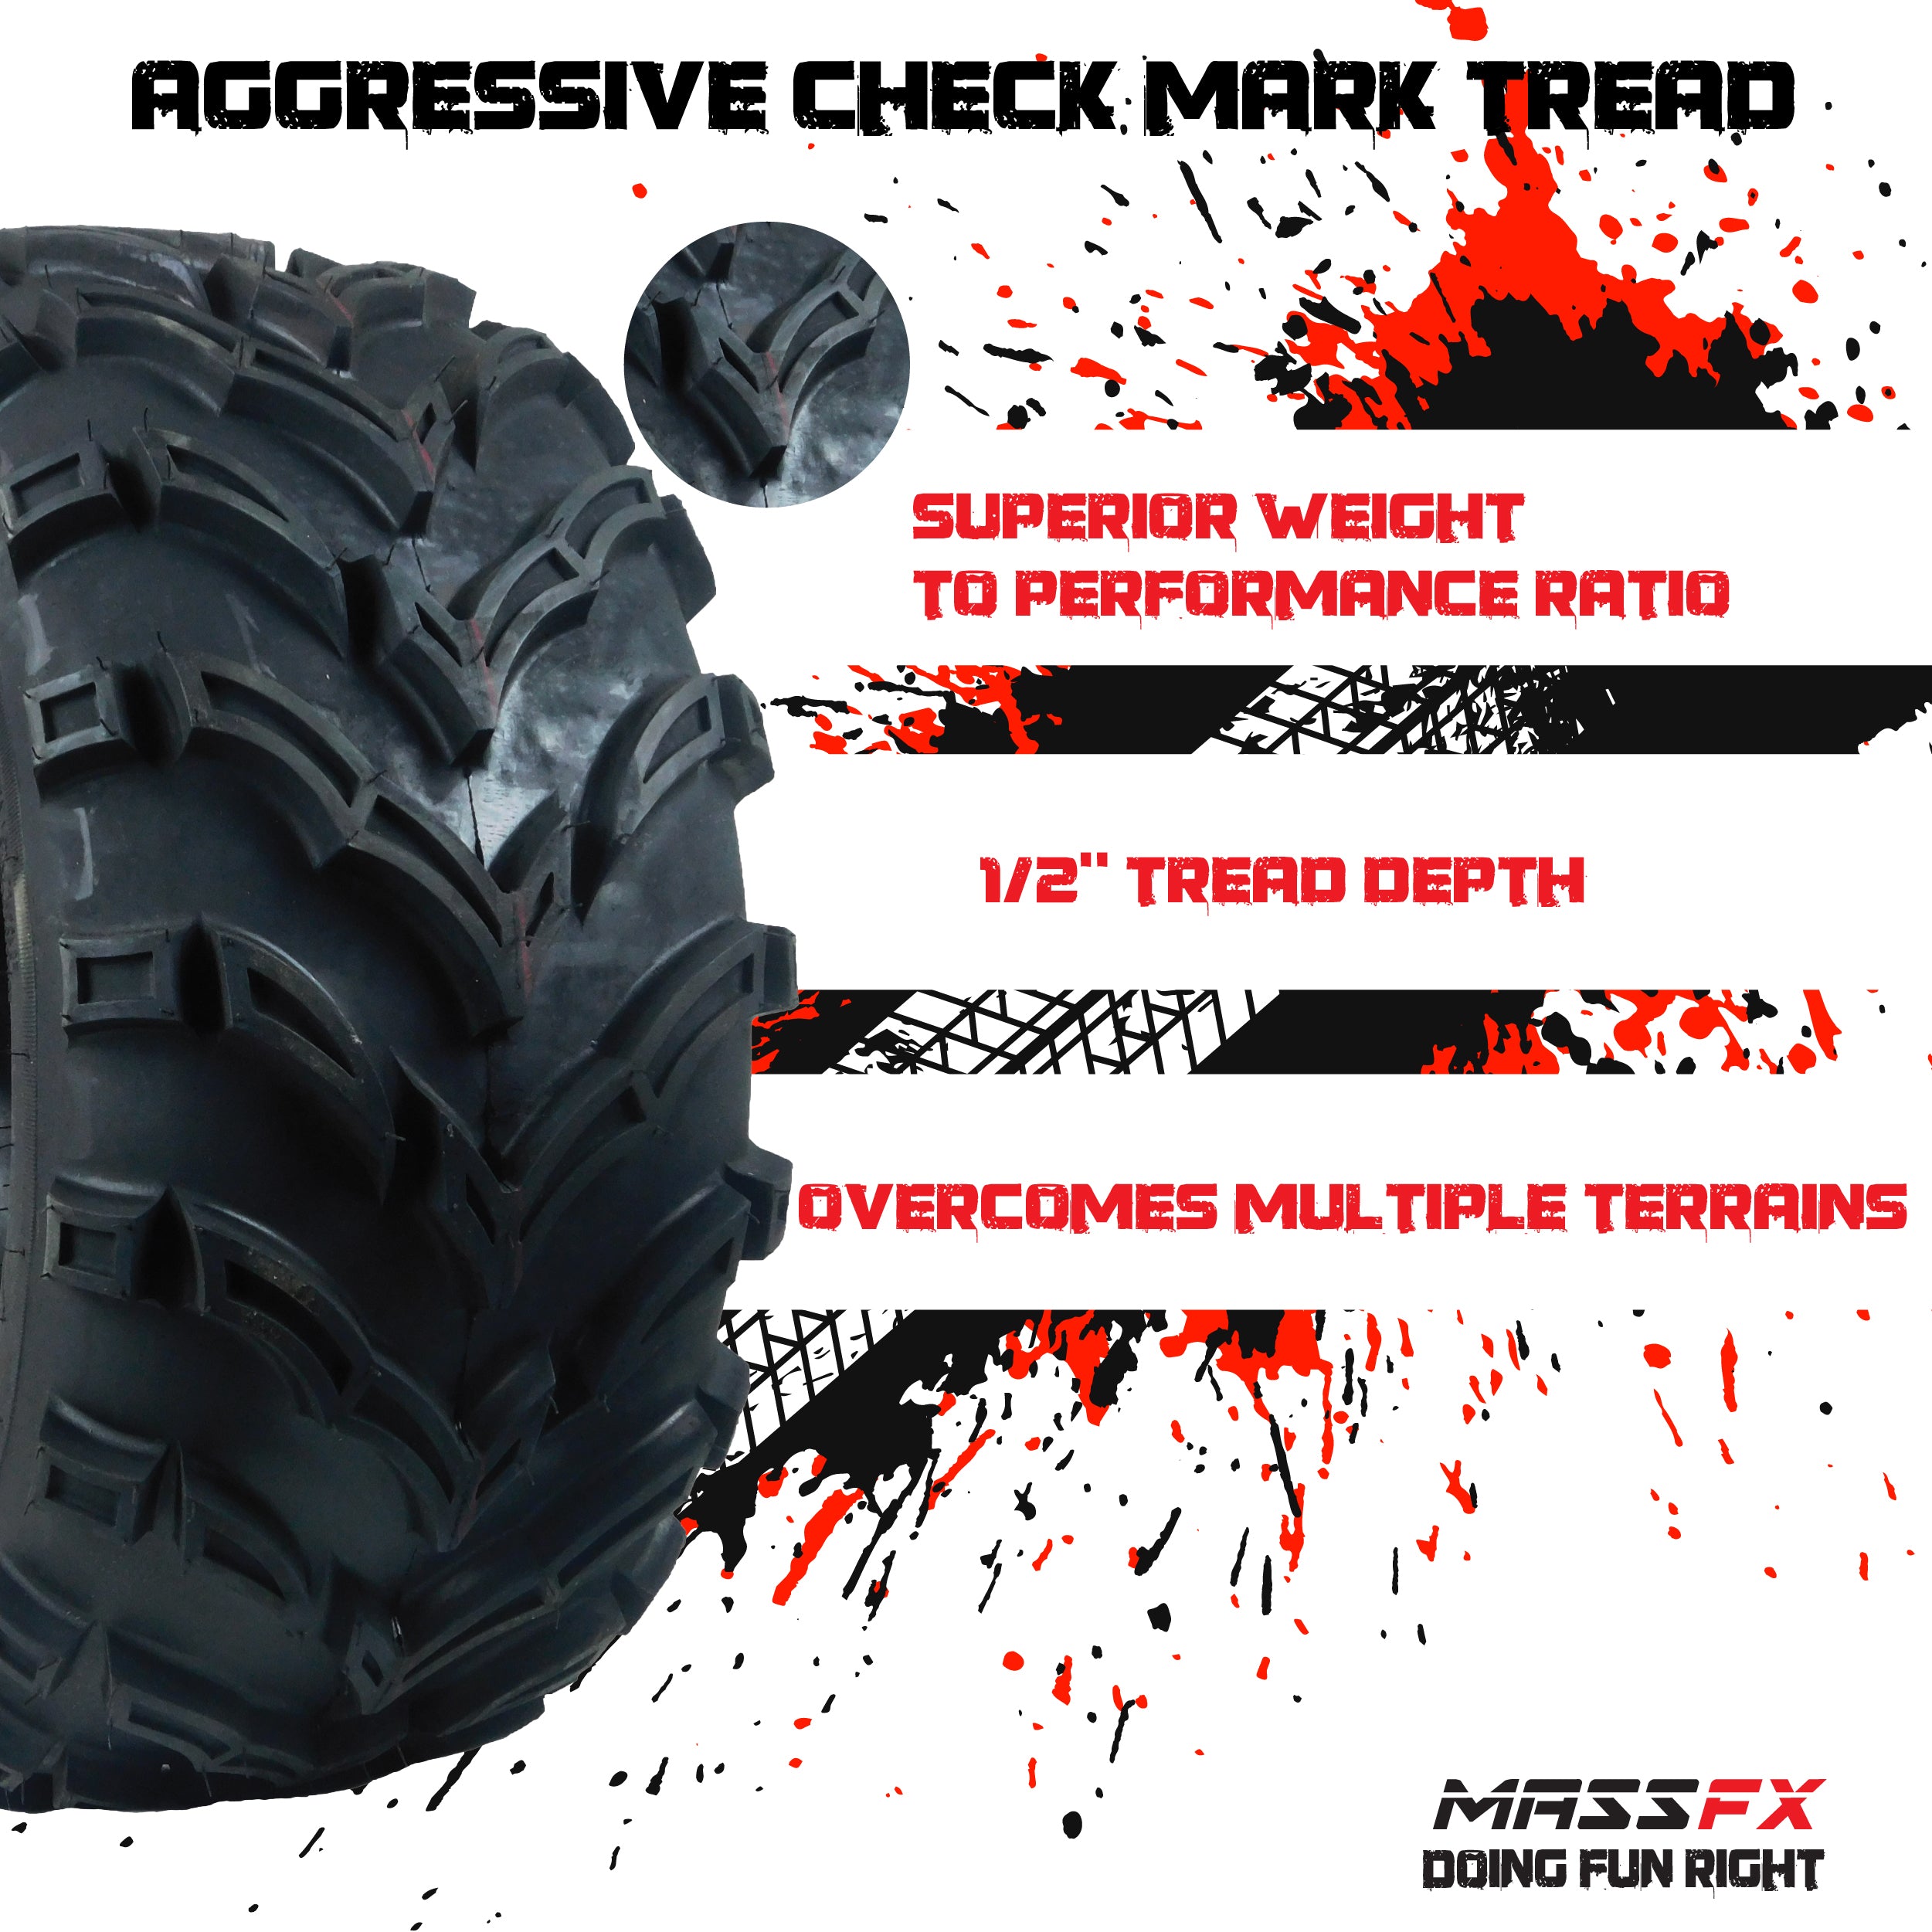 MASSFX Go Kart/ATV Single Tire 16x8-7 4Ply